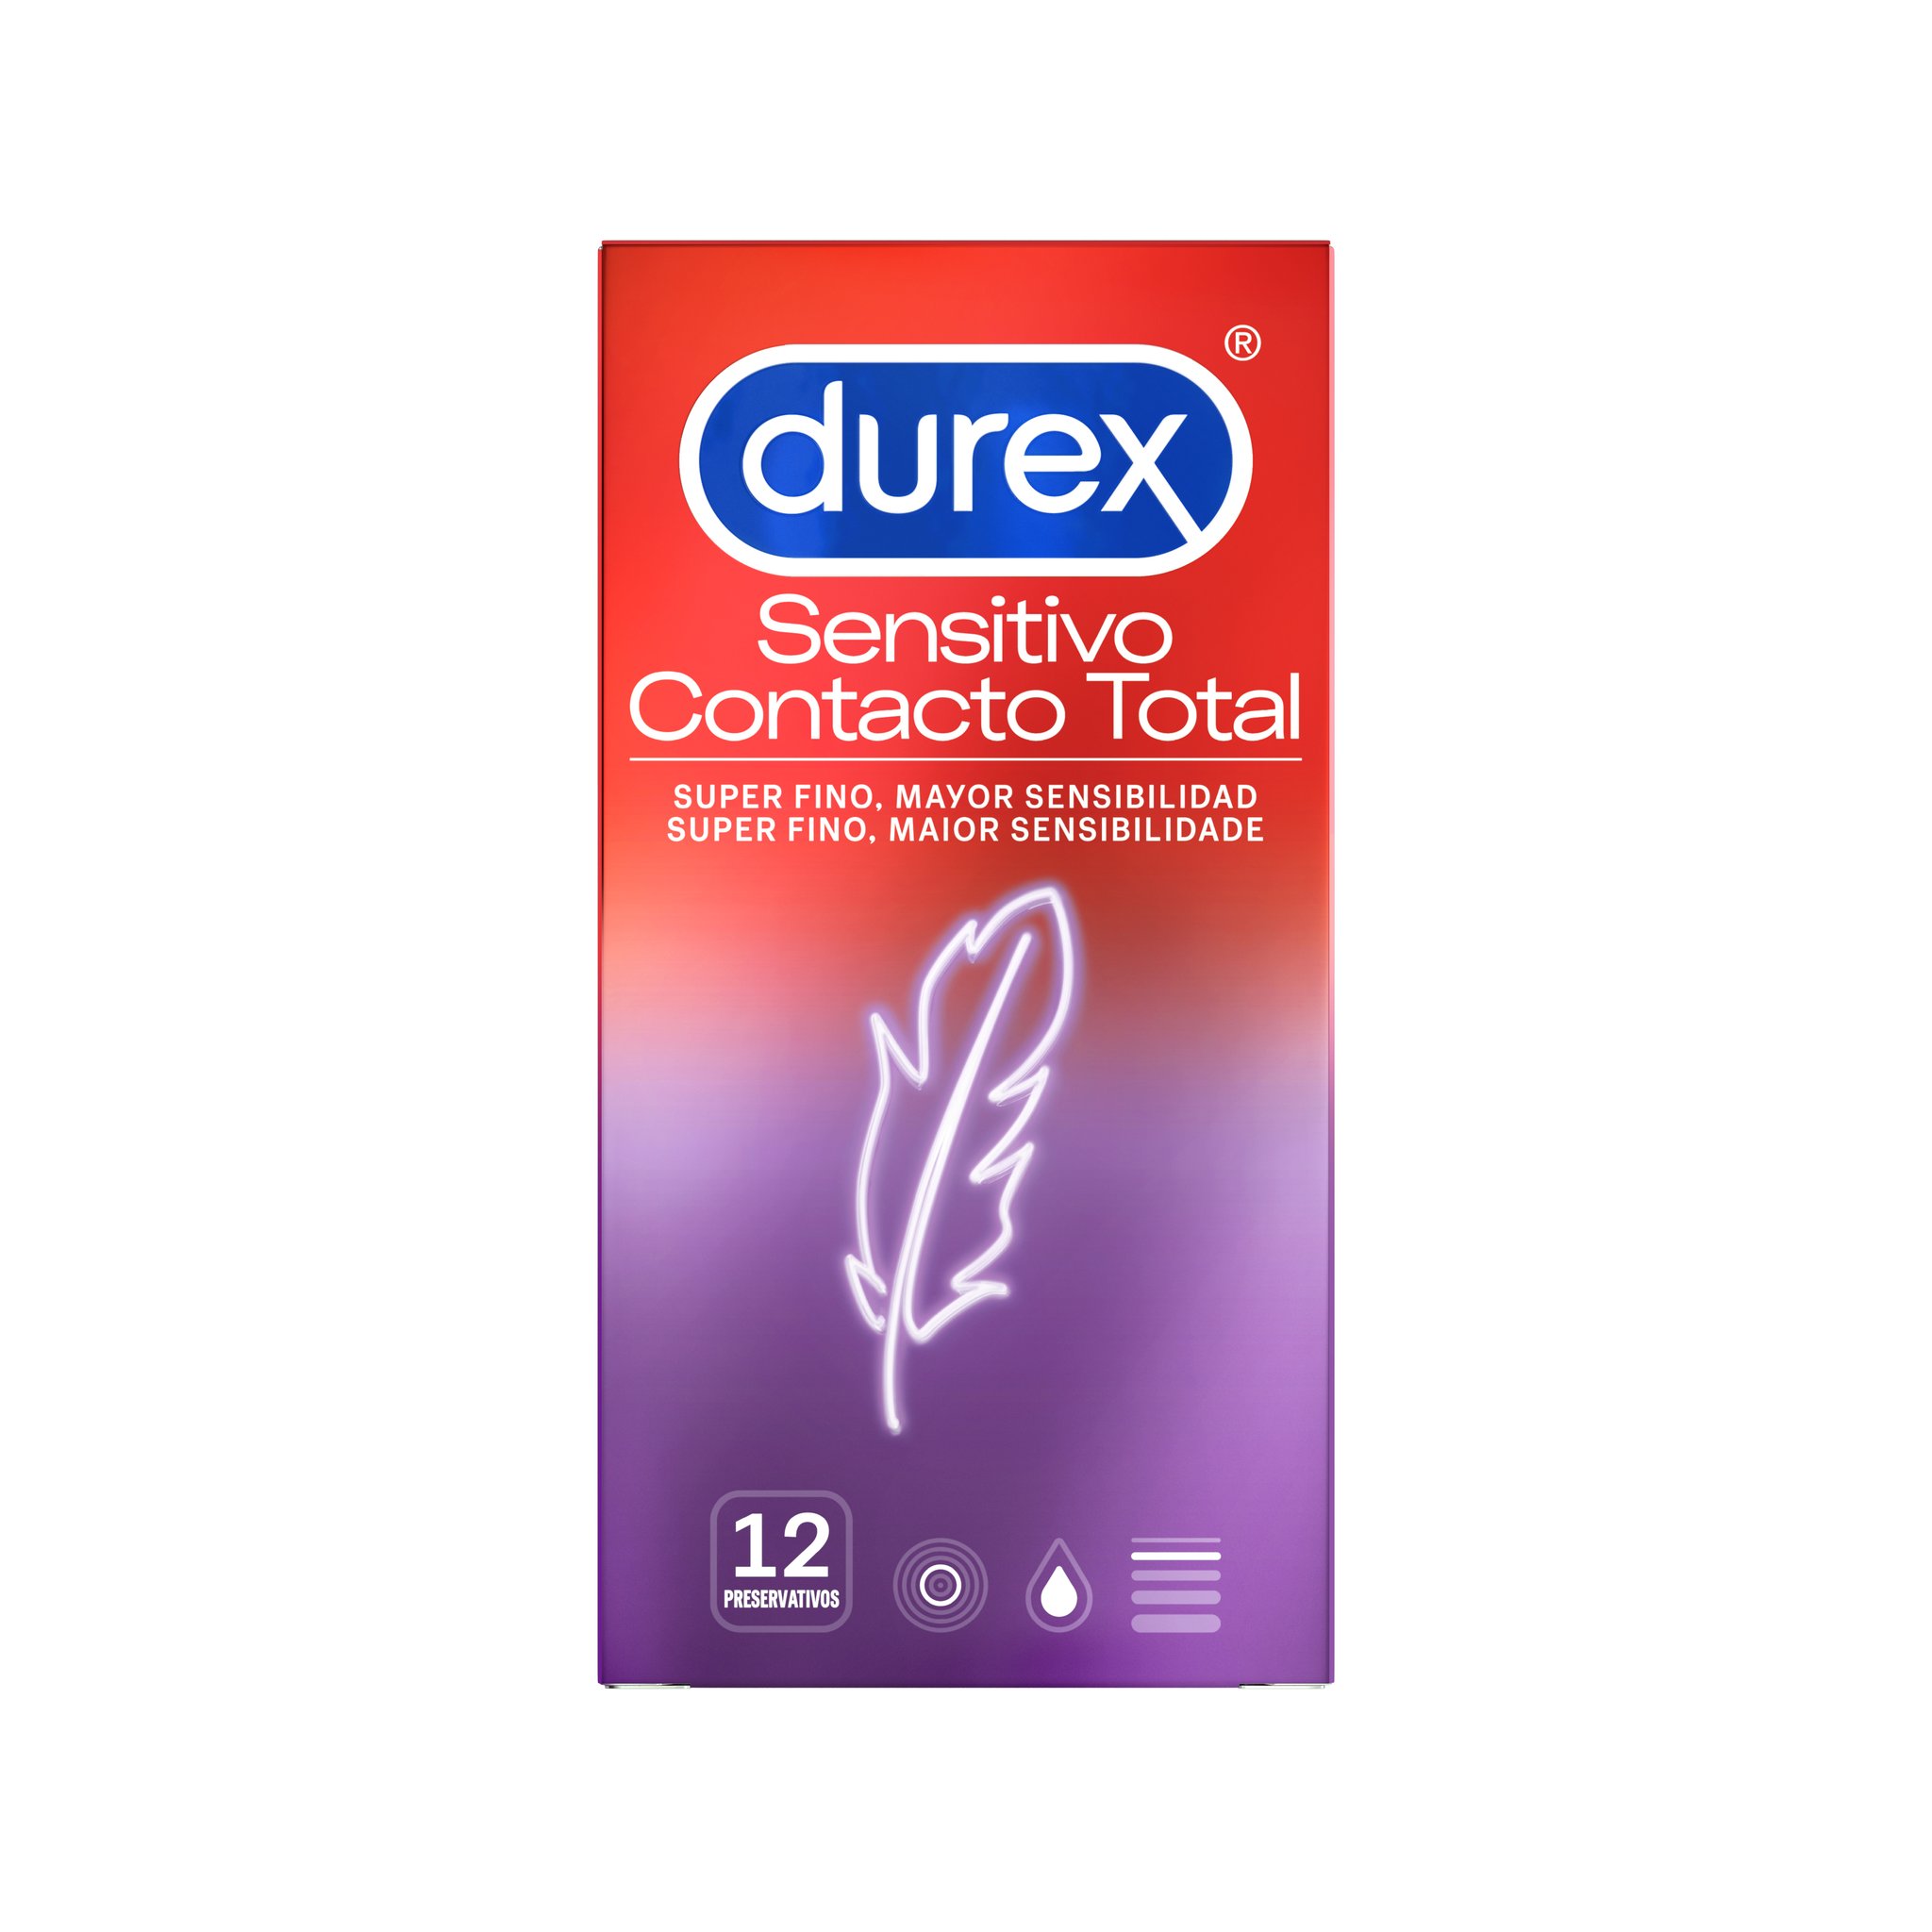 Durex Sensitivo Contacto Total X12 Preservativos